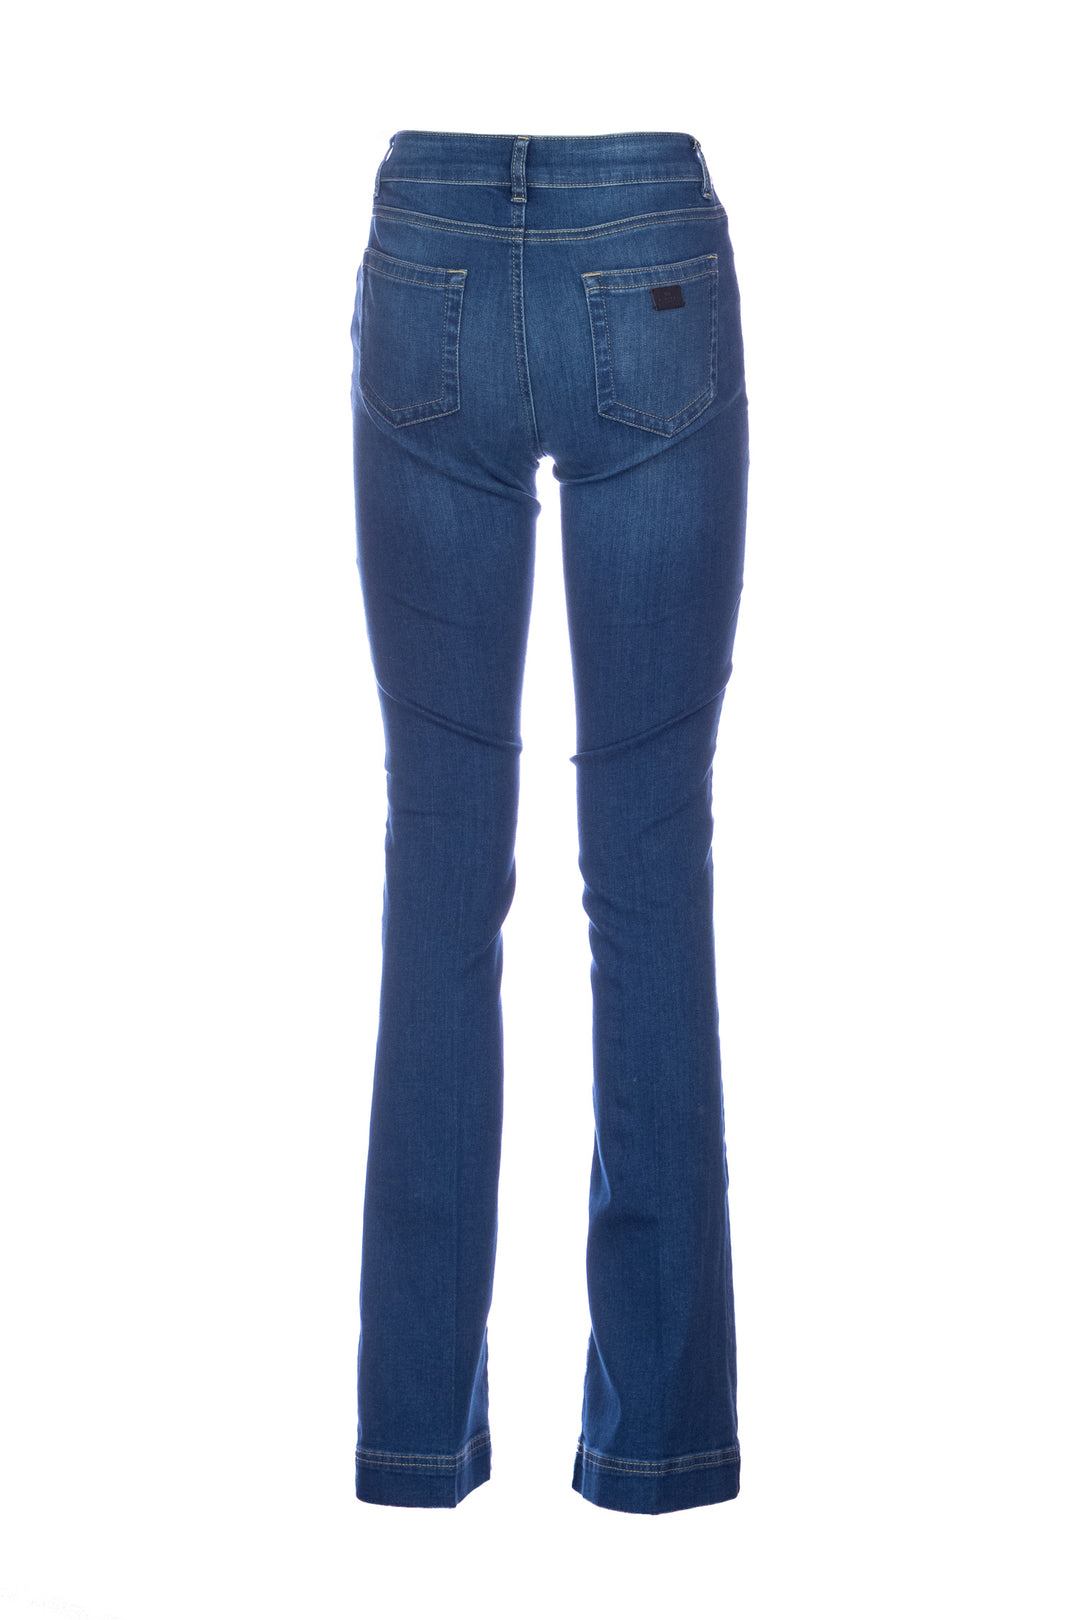 NENETTE Jeans a zampa “SENTINEL” in denim superstretch lavaggio medio - Mancinelli 1954